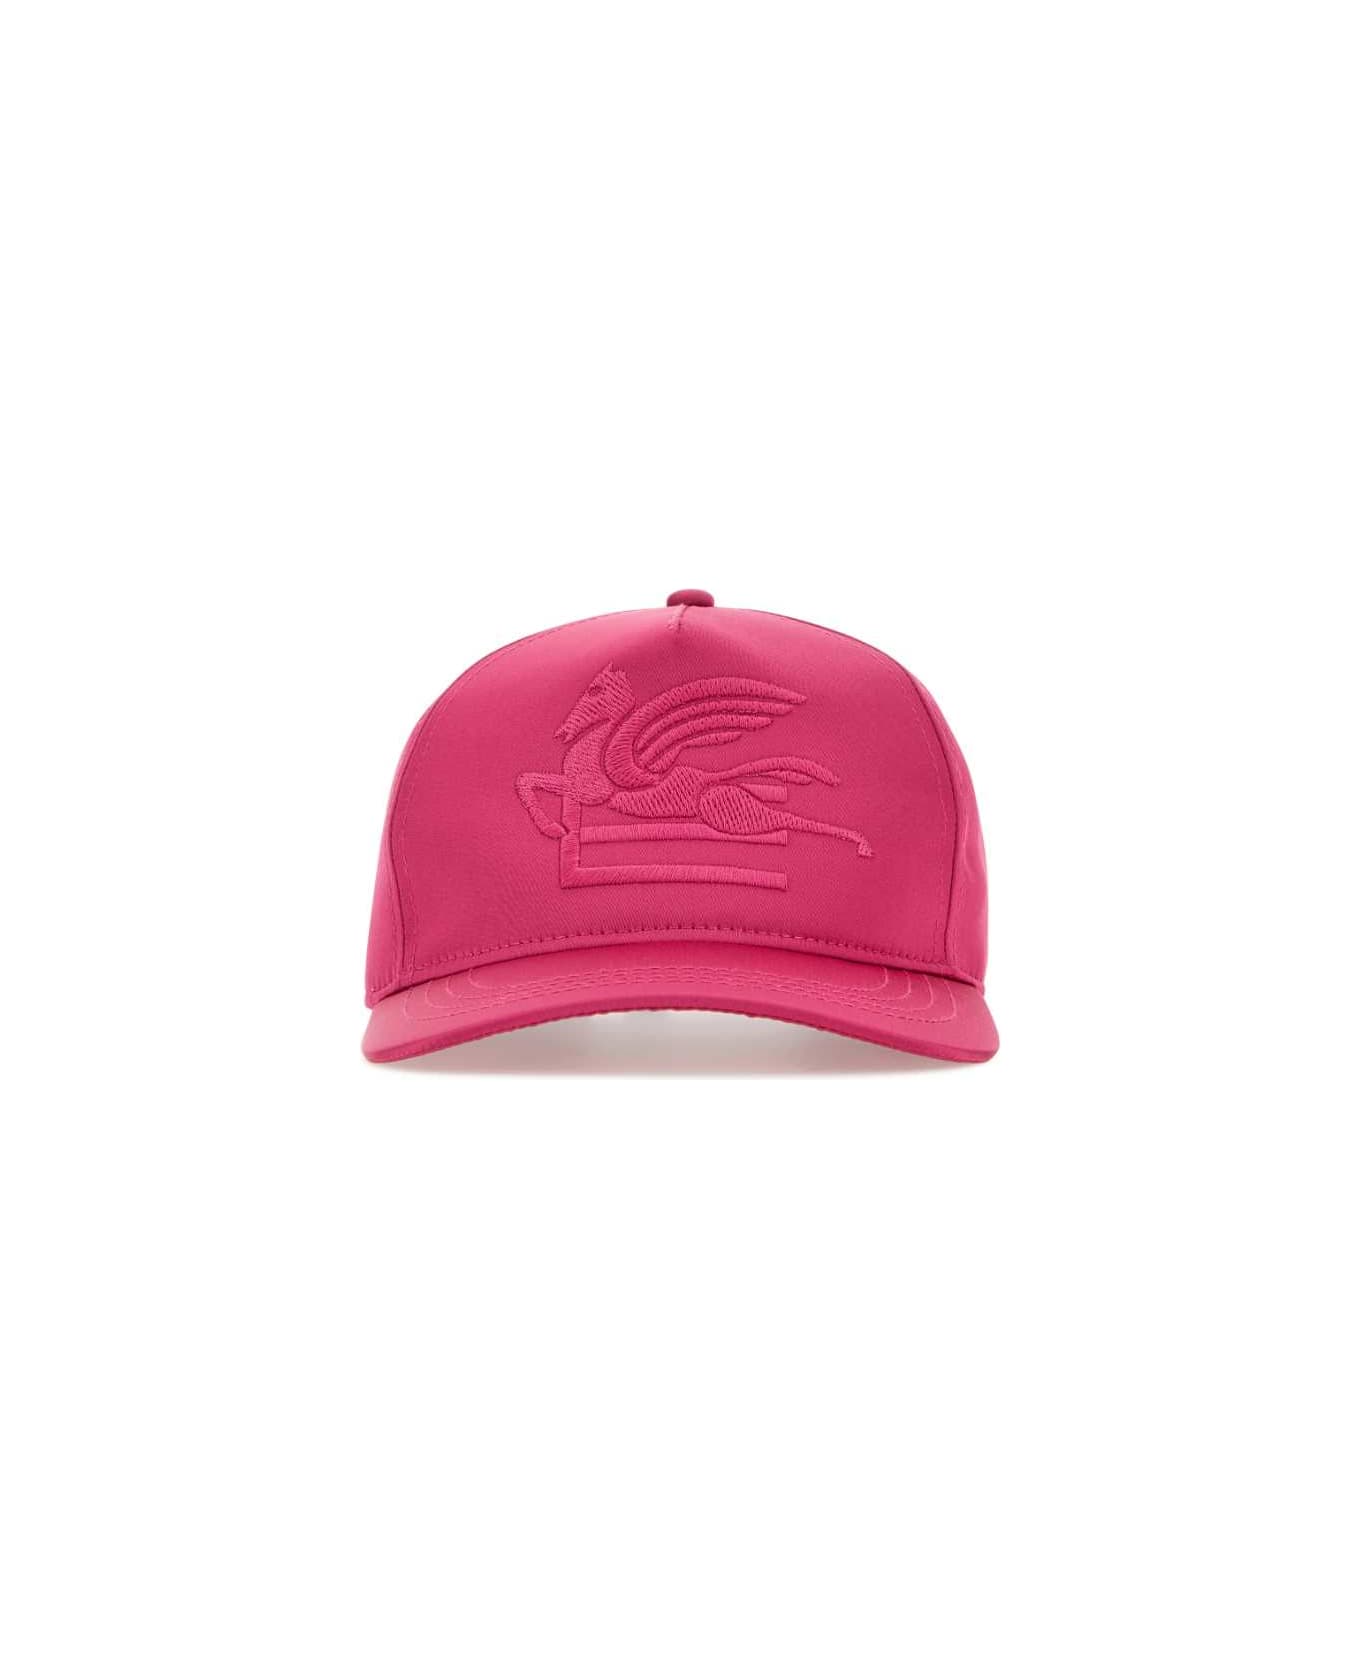 Etro Fuchsia Satin Baseball Cap - PINK